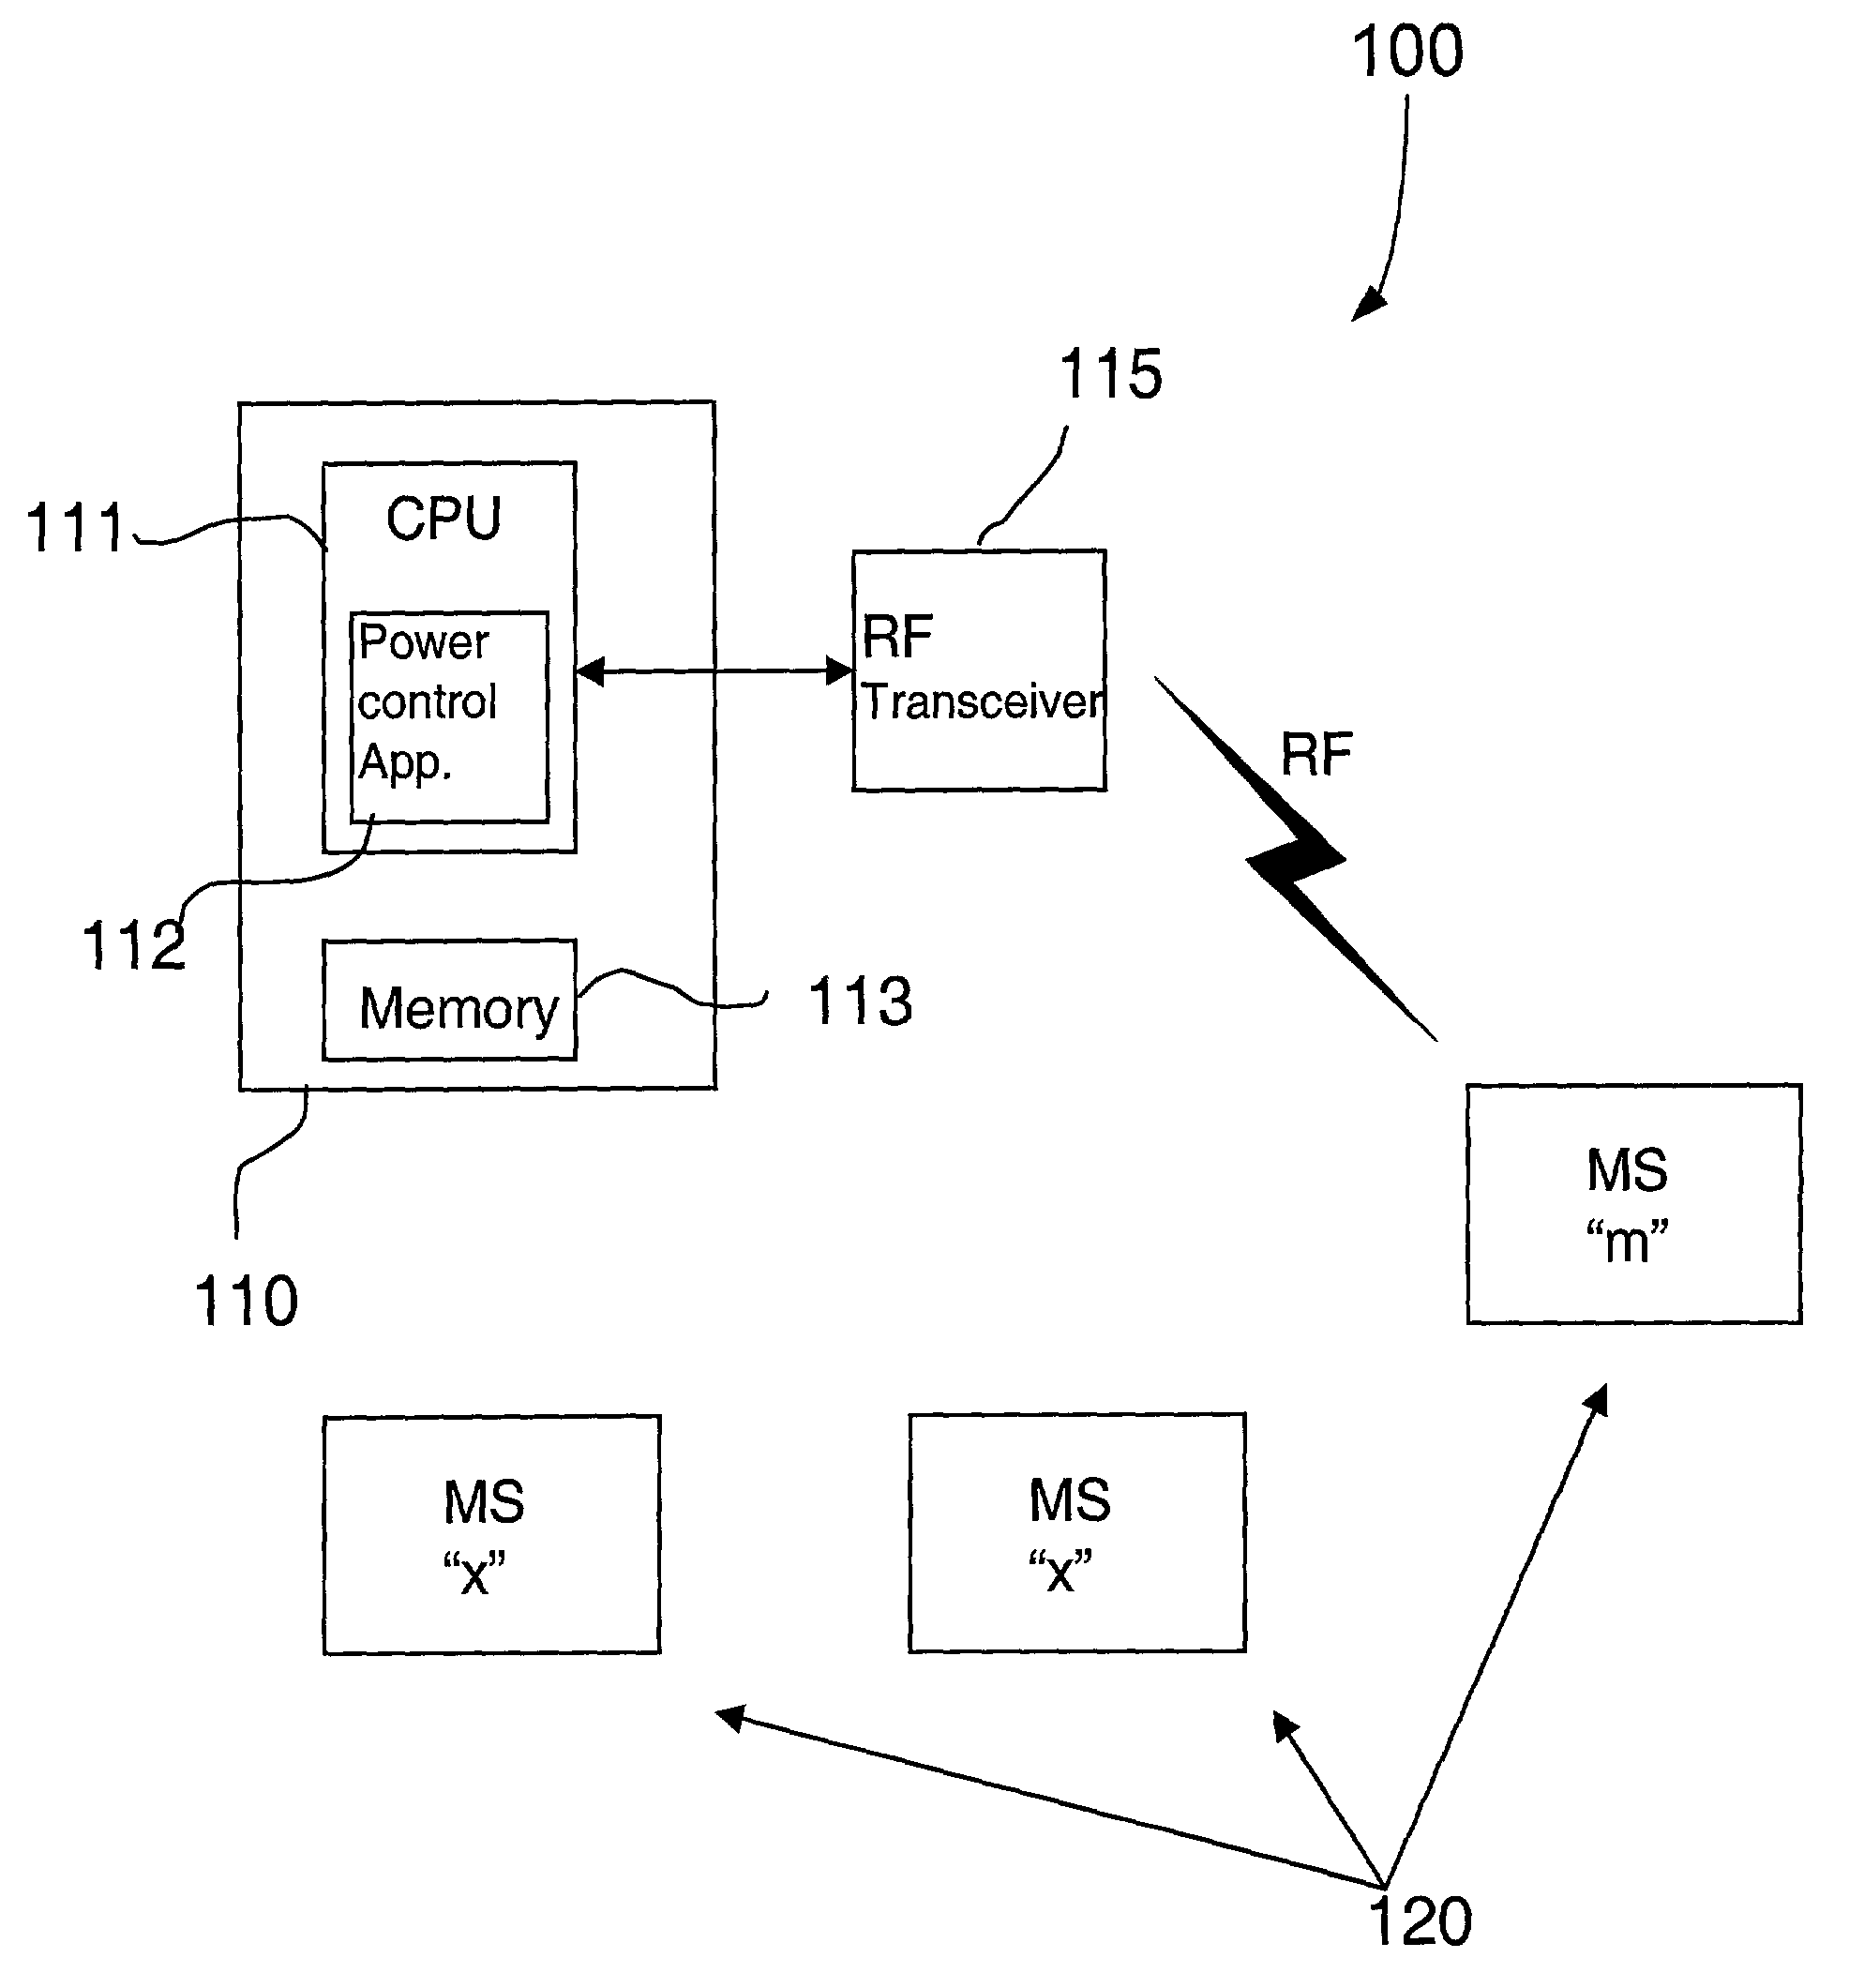 Uplink power control algorithm